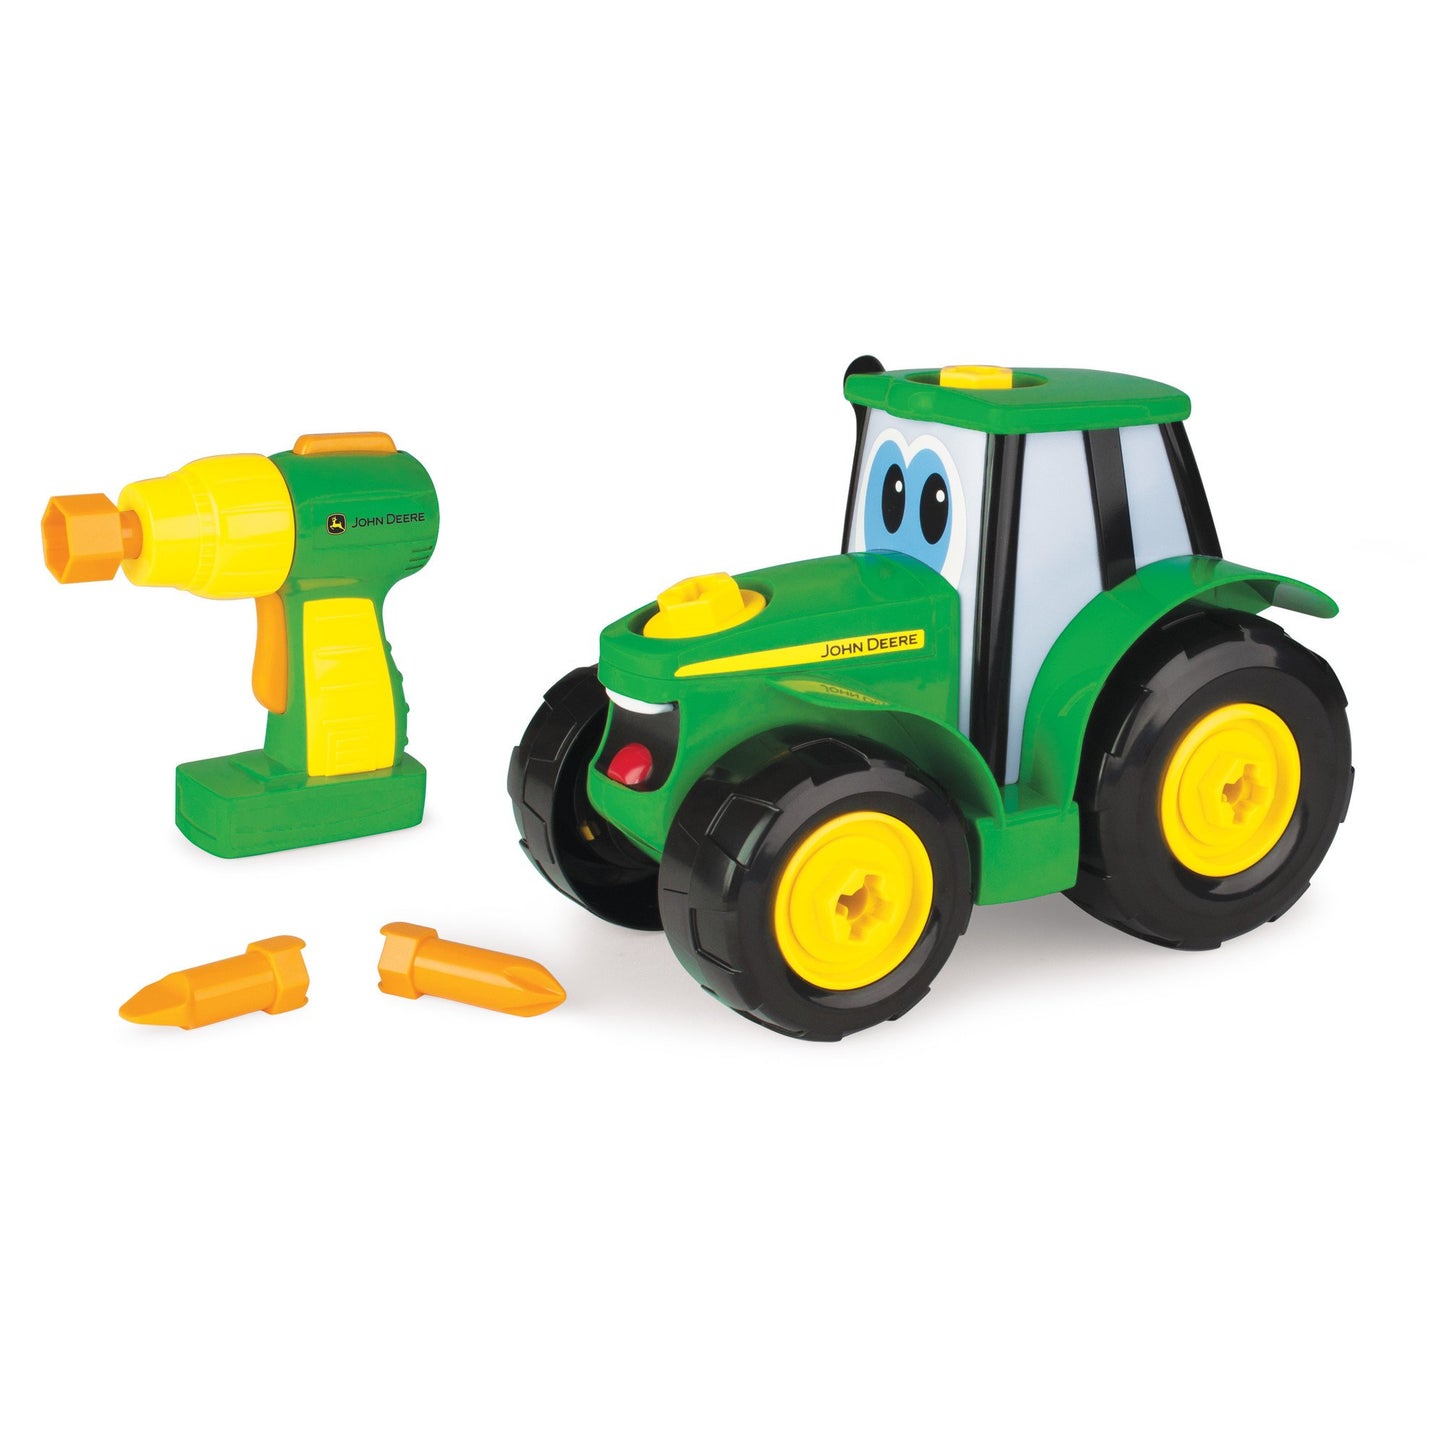 John Deere - Build a Johnny Tractor